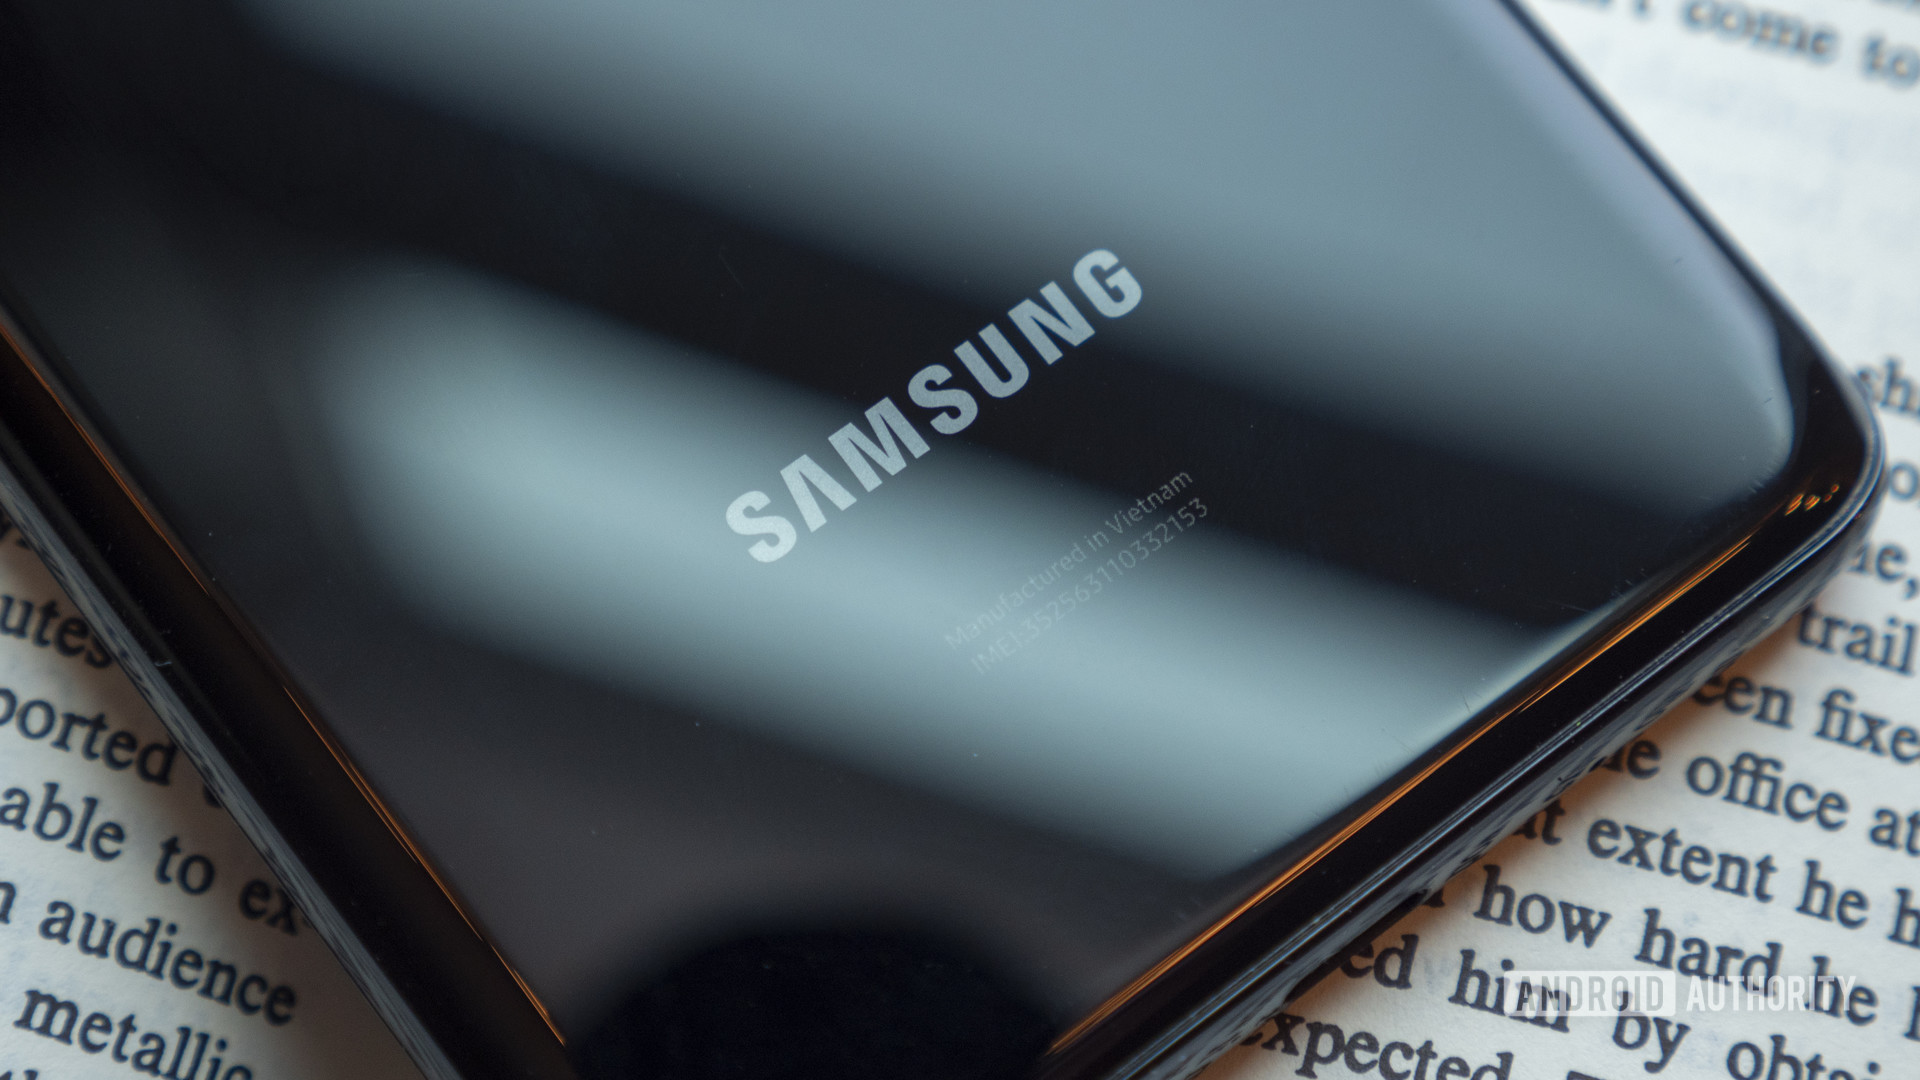 Samsung Galaxy A Quantum revealed: A phone with quantum security